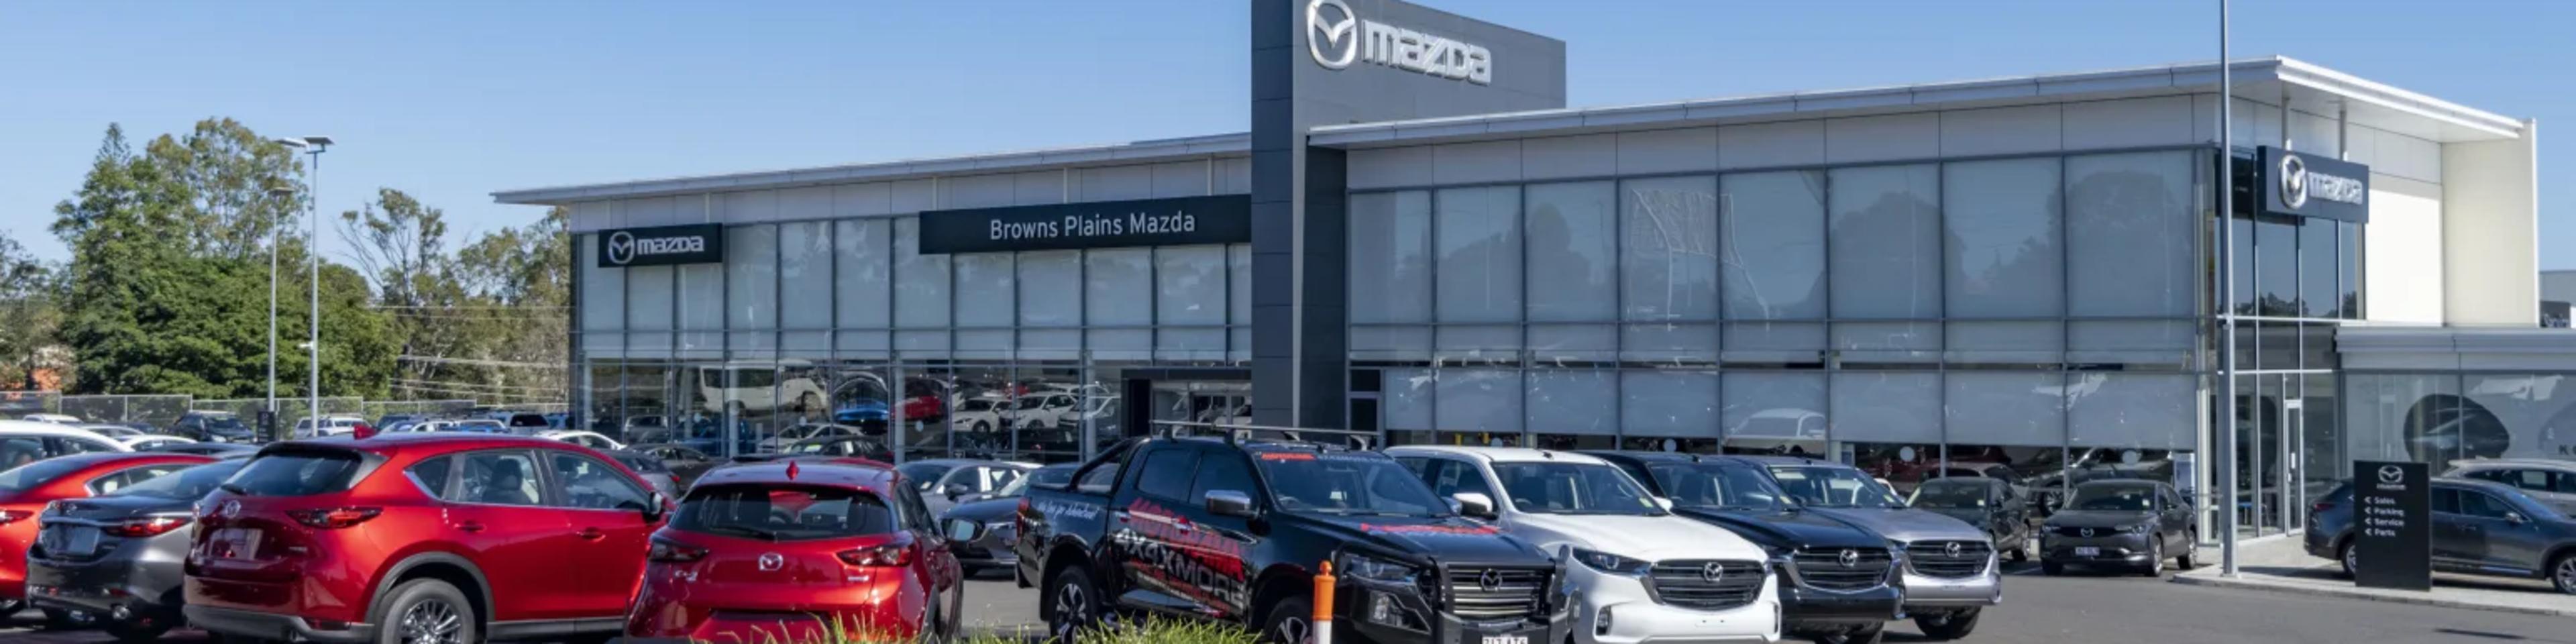 Latest News Browns Plains Mazda